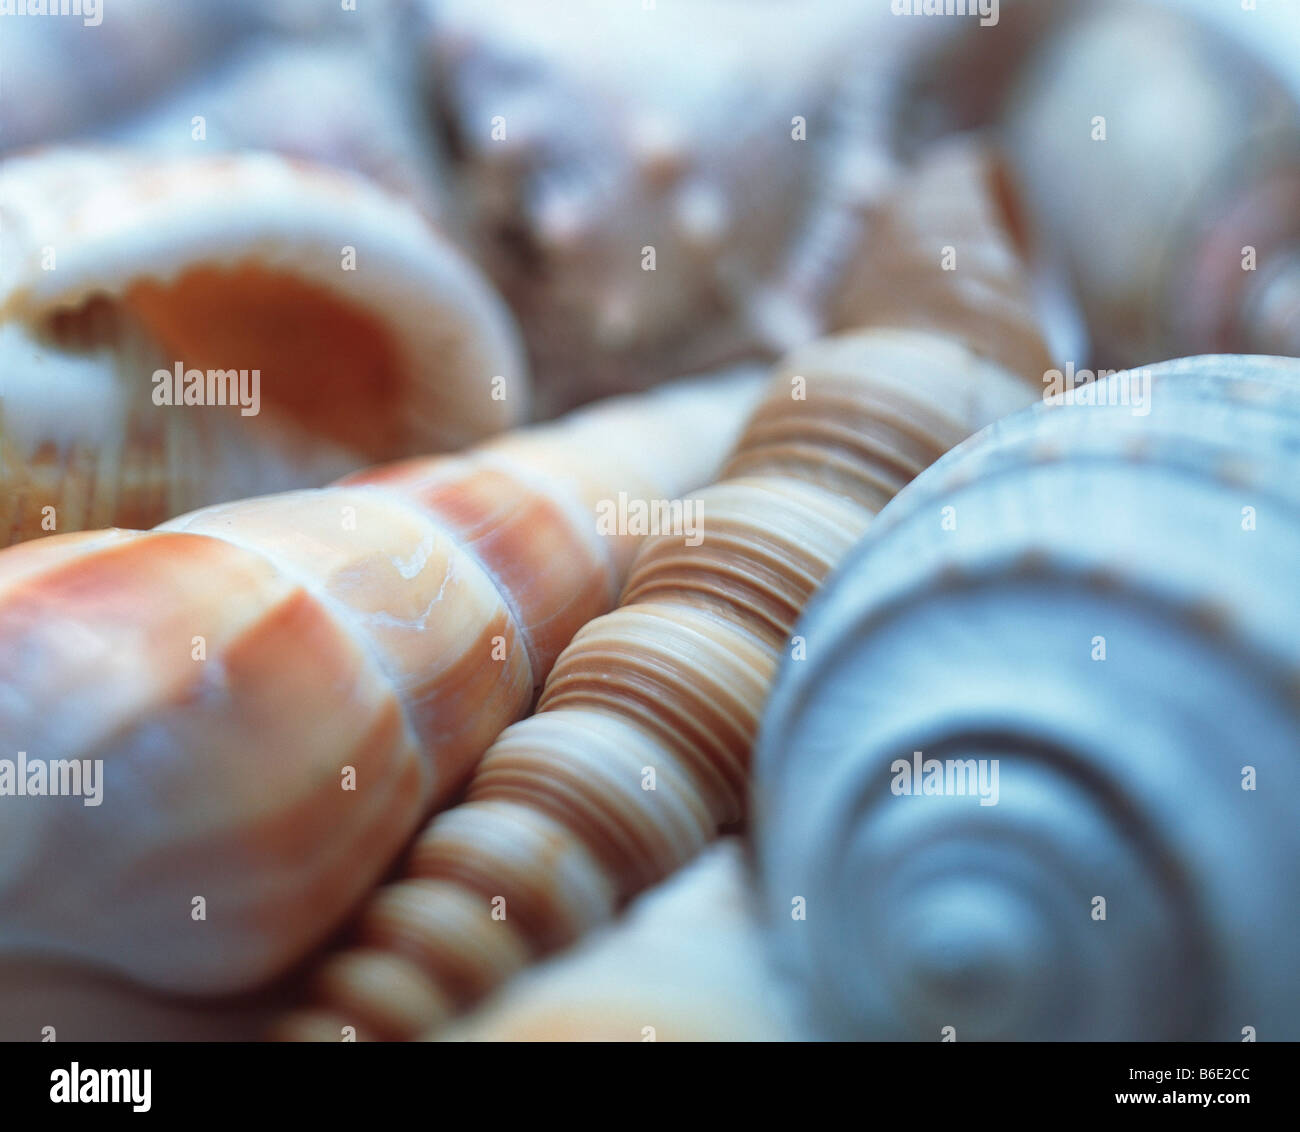 Shells of unidentified sea snails. Stock Photo